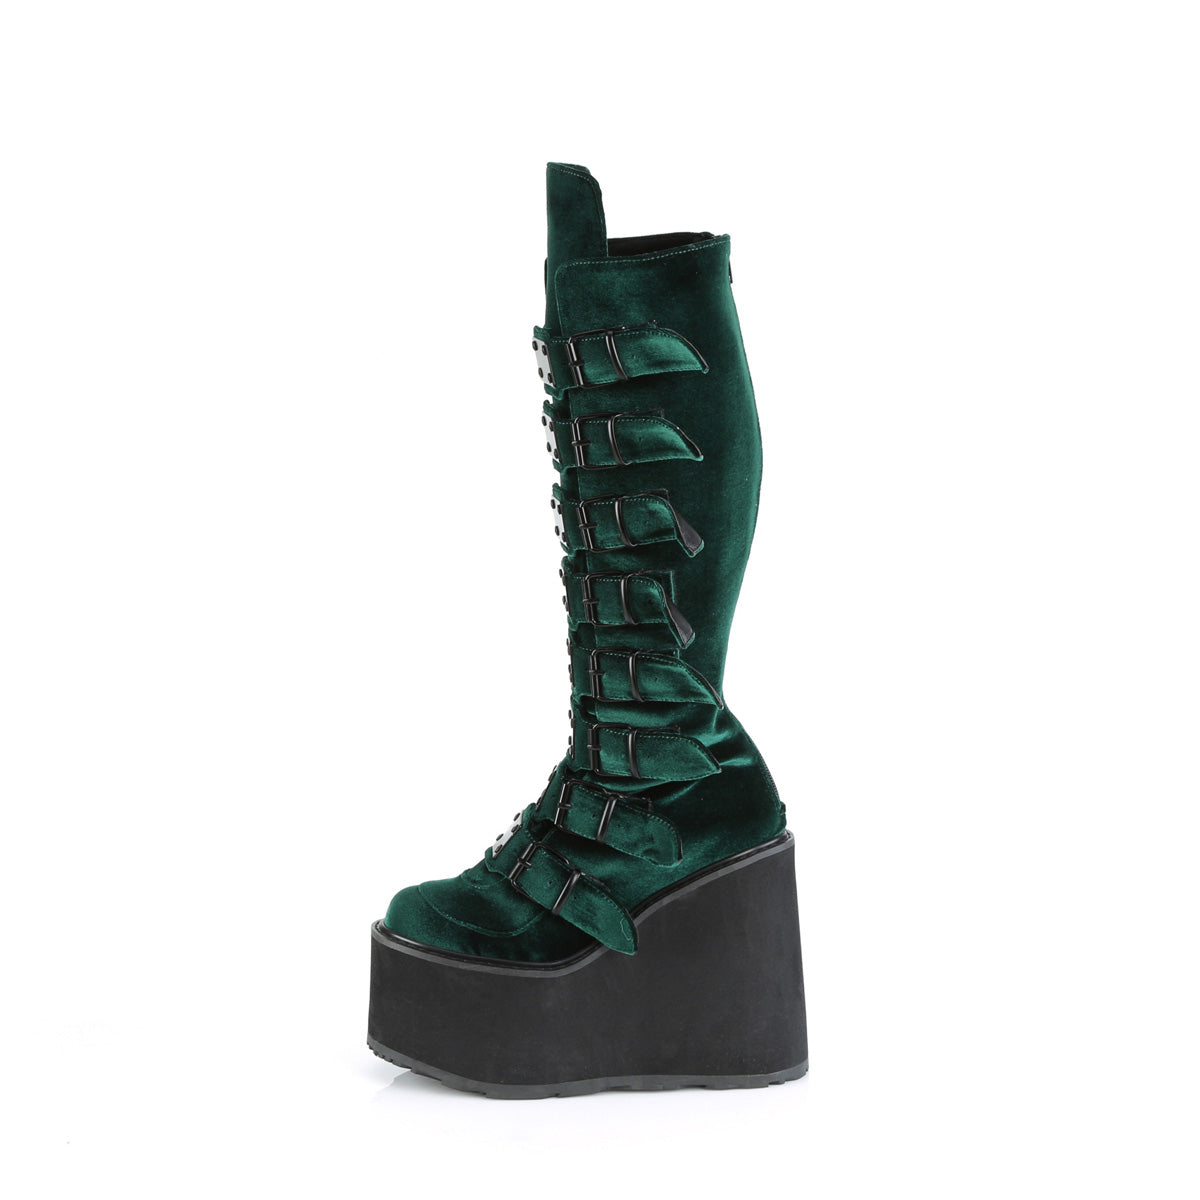 SWING-815 Demonia Emerald Velvet Women's Mid-Calf & Knee High Boots [Demonia Cult Alternative Footwear]